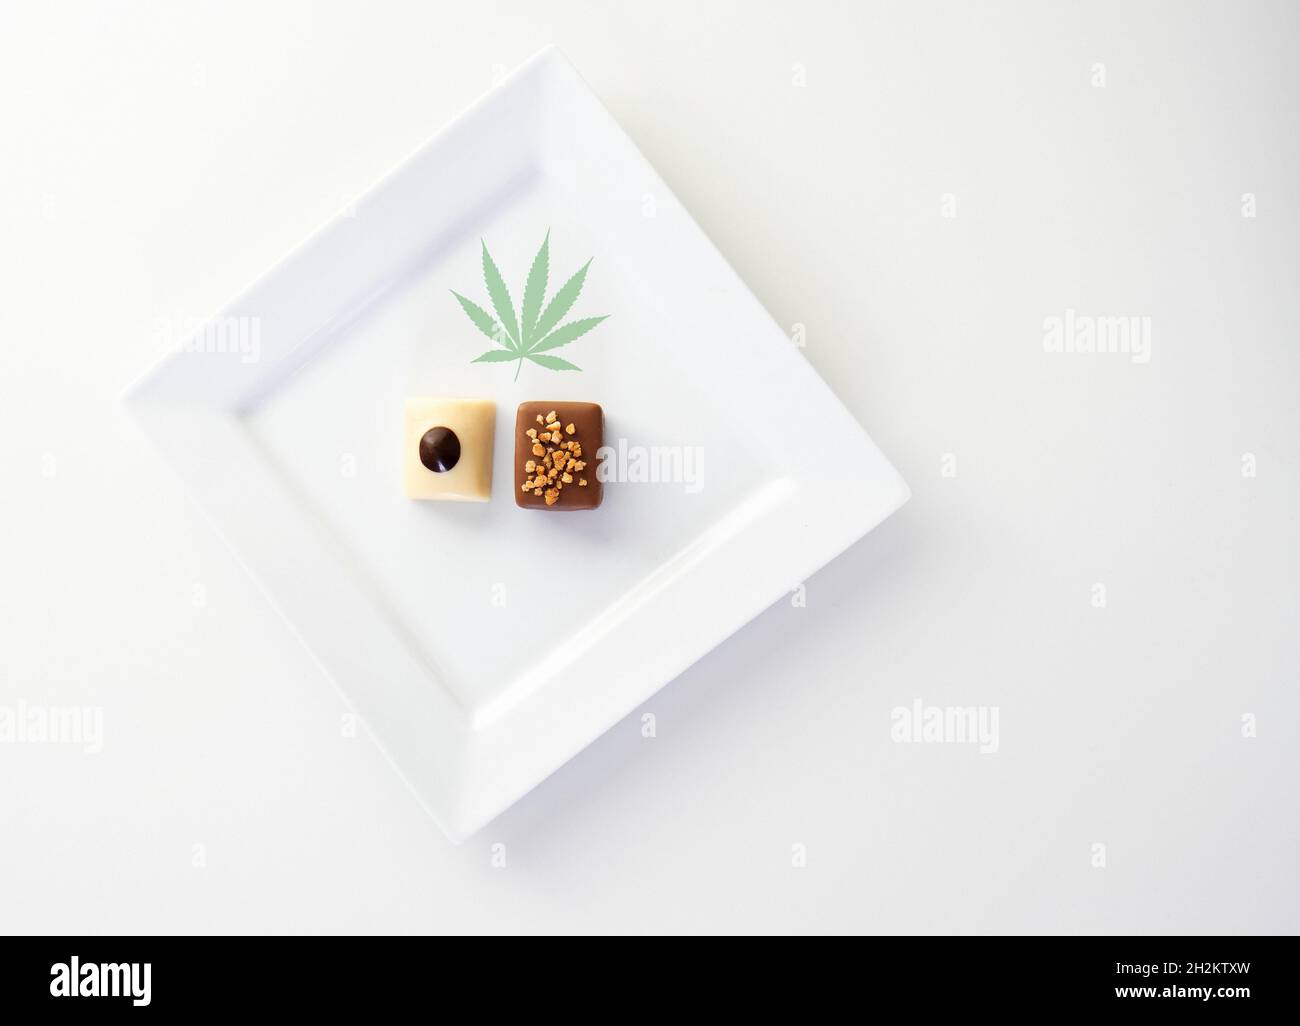 Cannabis infused chocolates, conceptual image Stock Photo